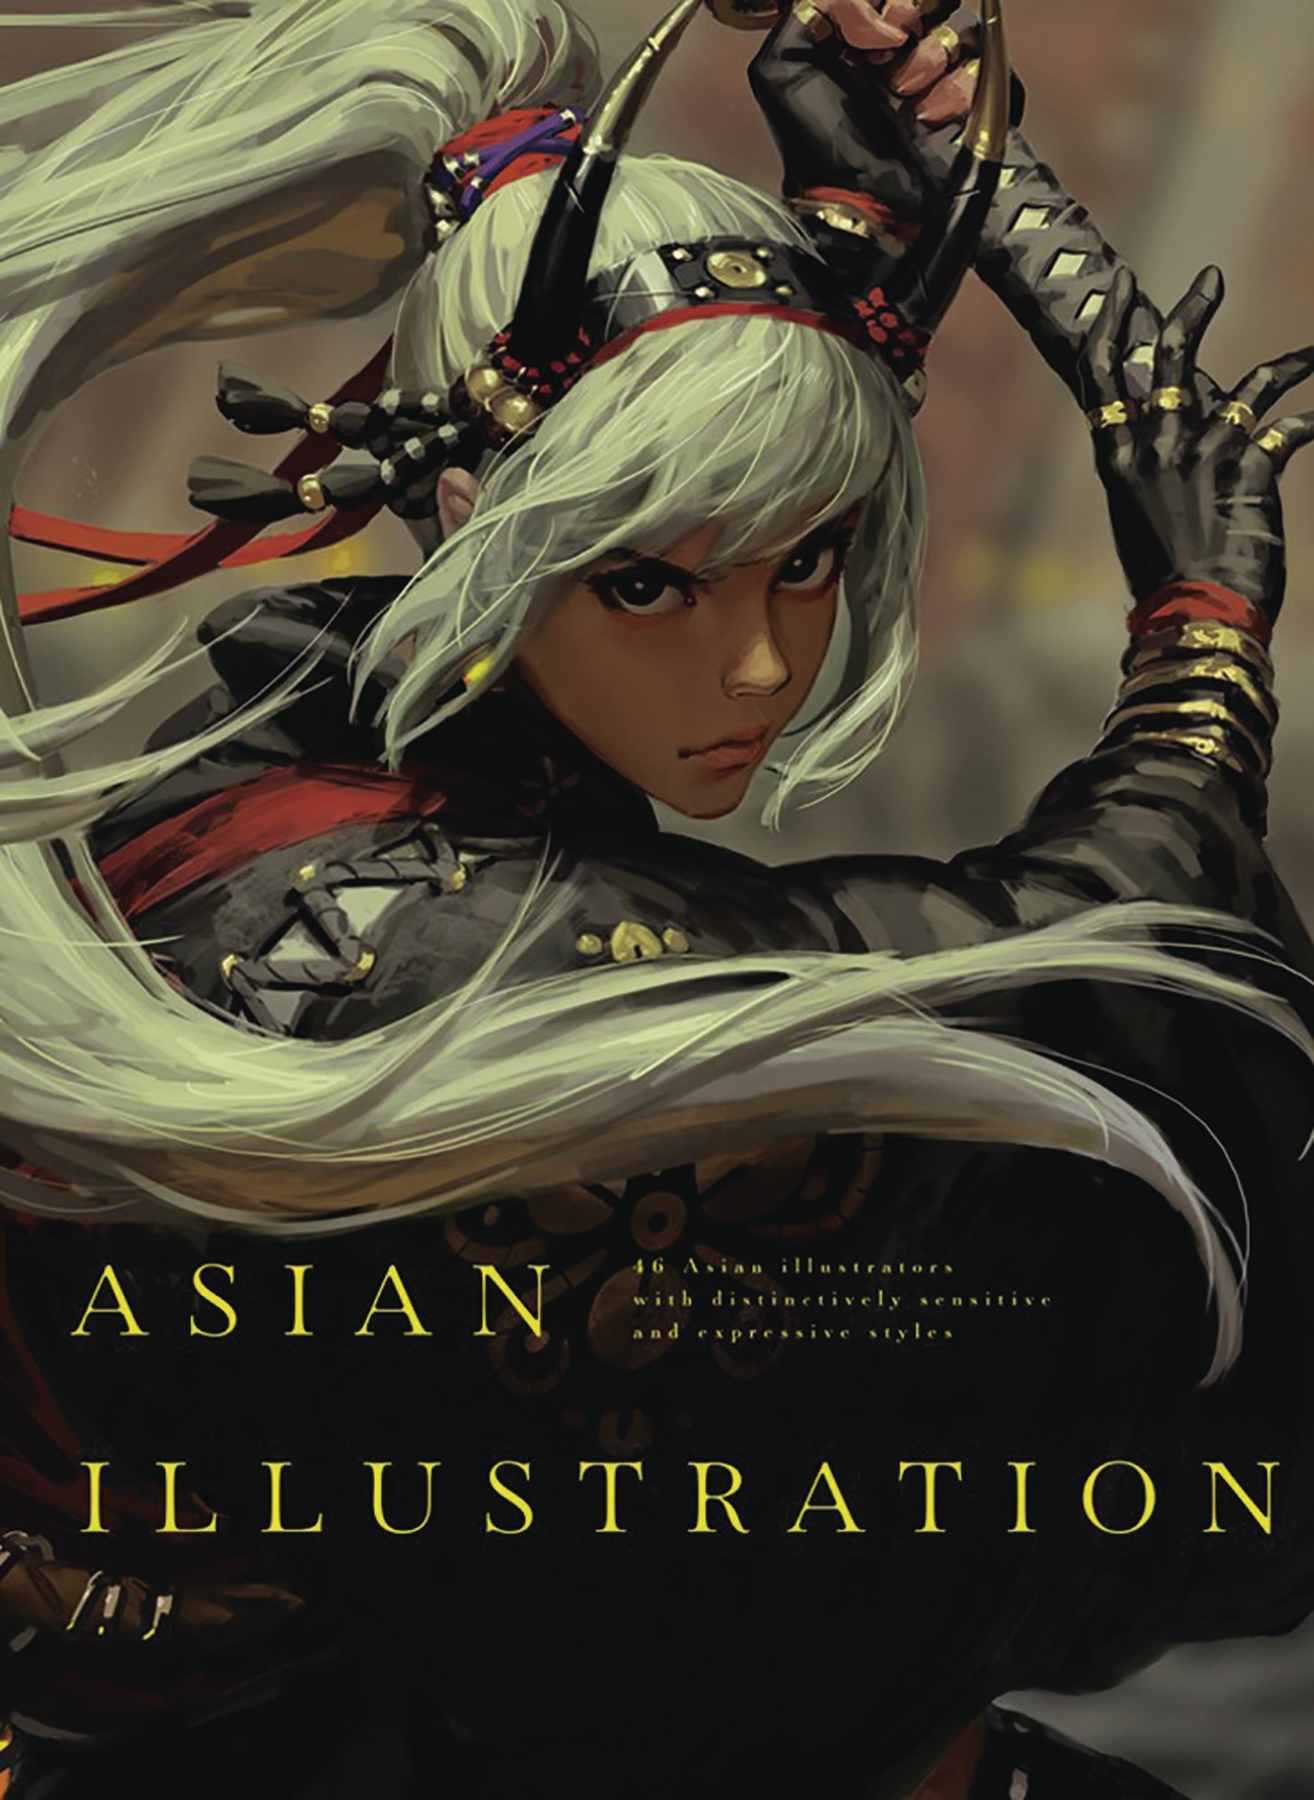 Asian Illustration 26 Asian Illustrators Soft Cover